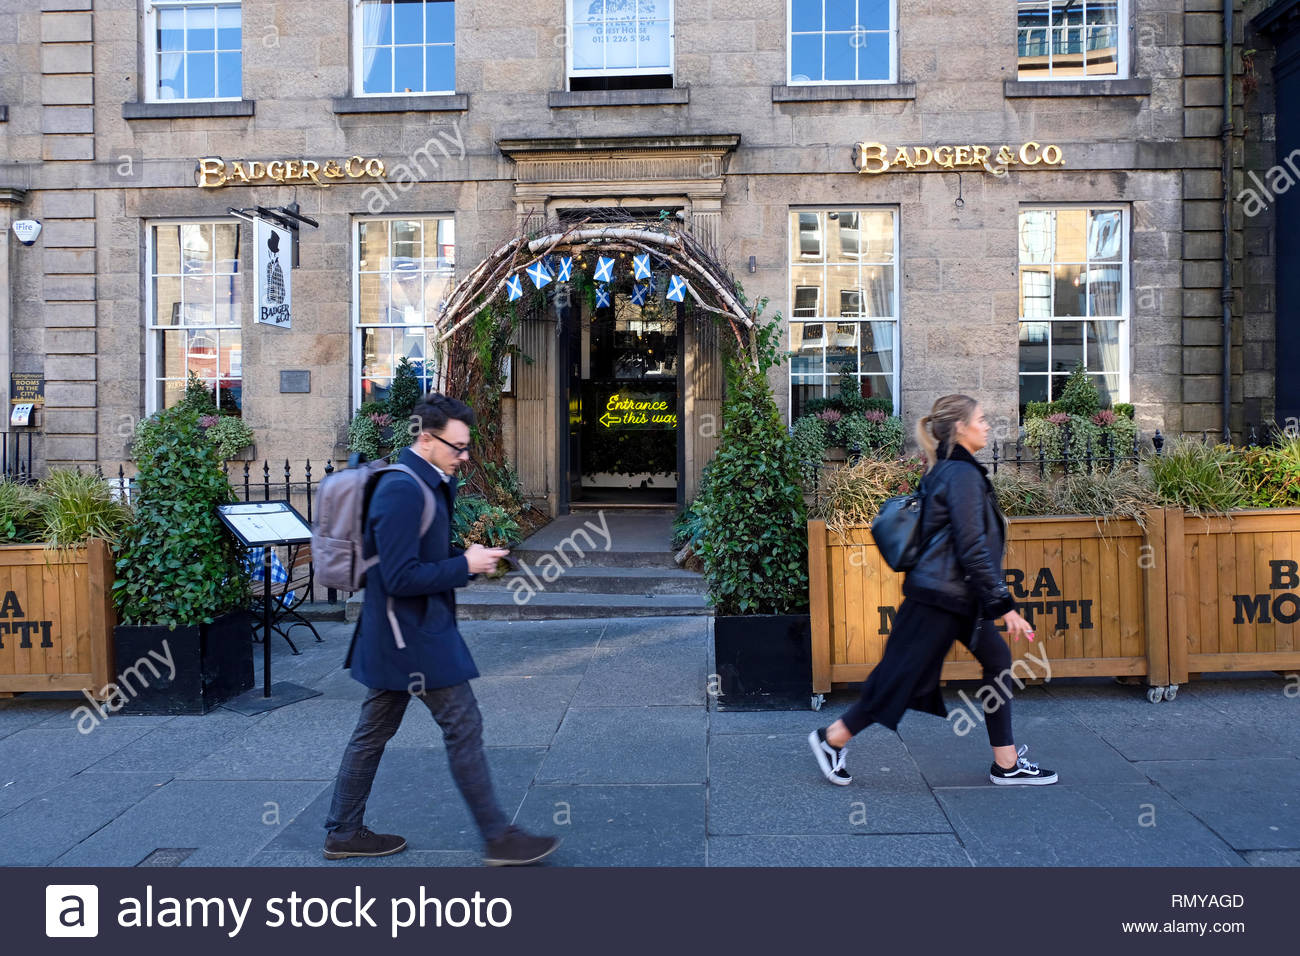 Badger & co. restaurant and bar, Castle Street, Edinburgh Scotland Stock Photo